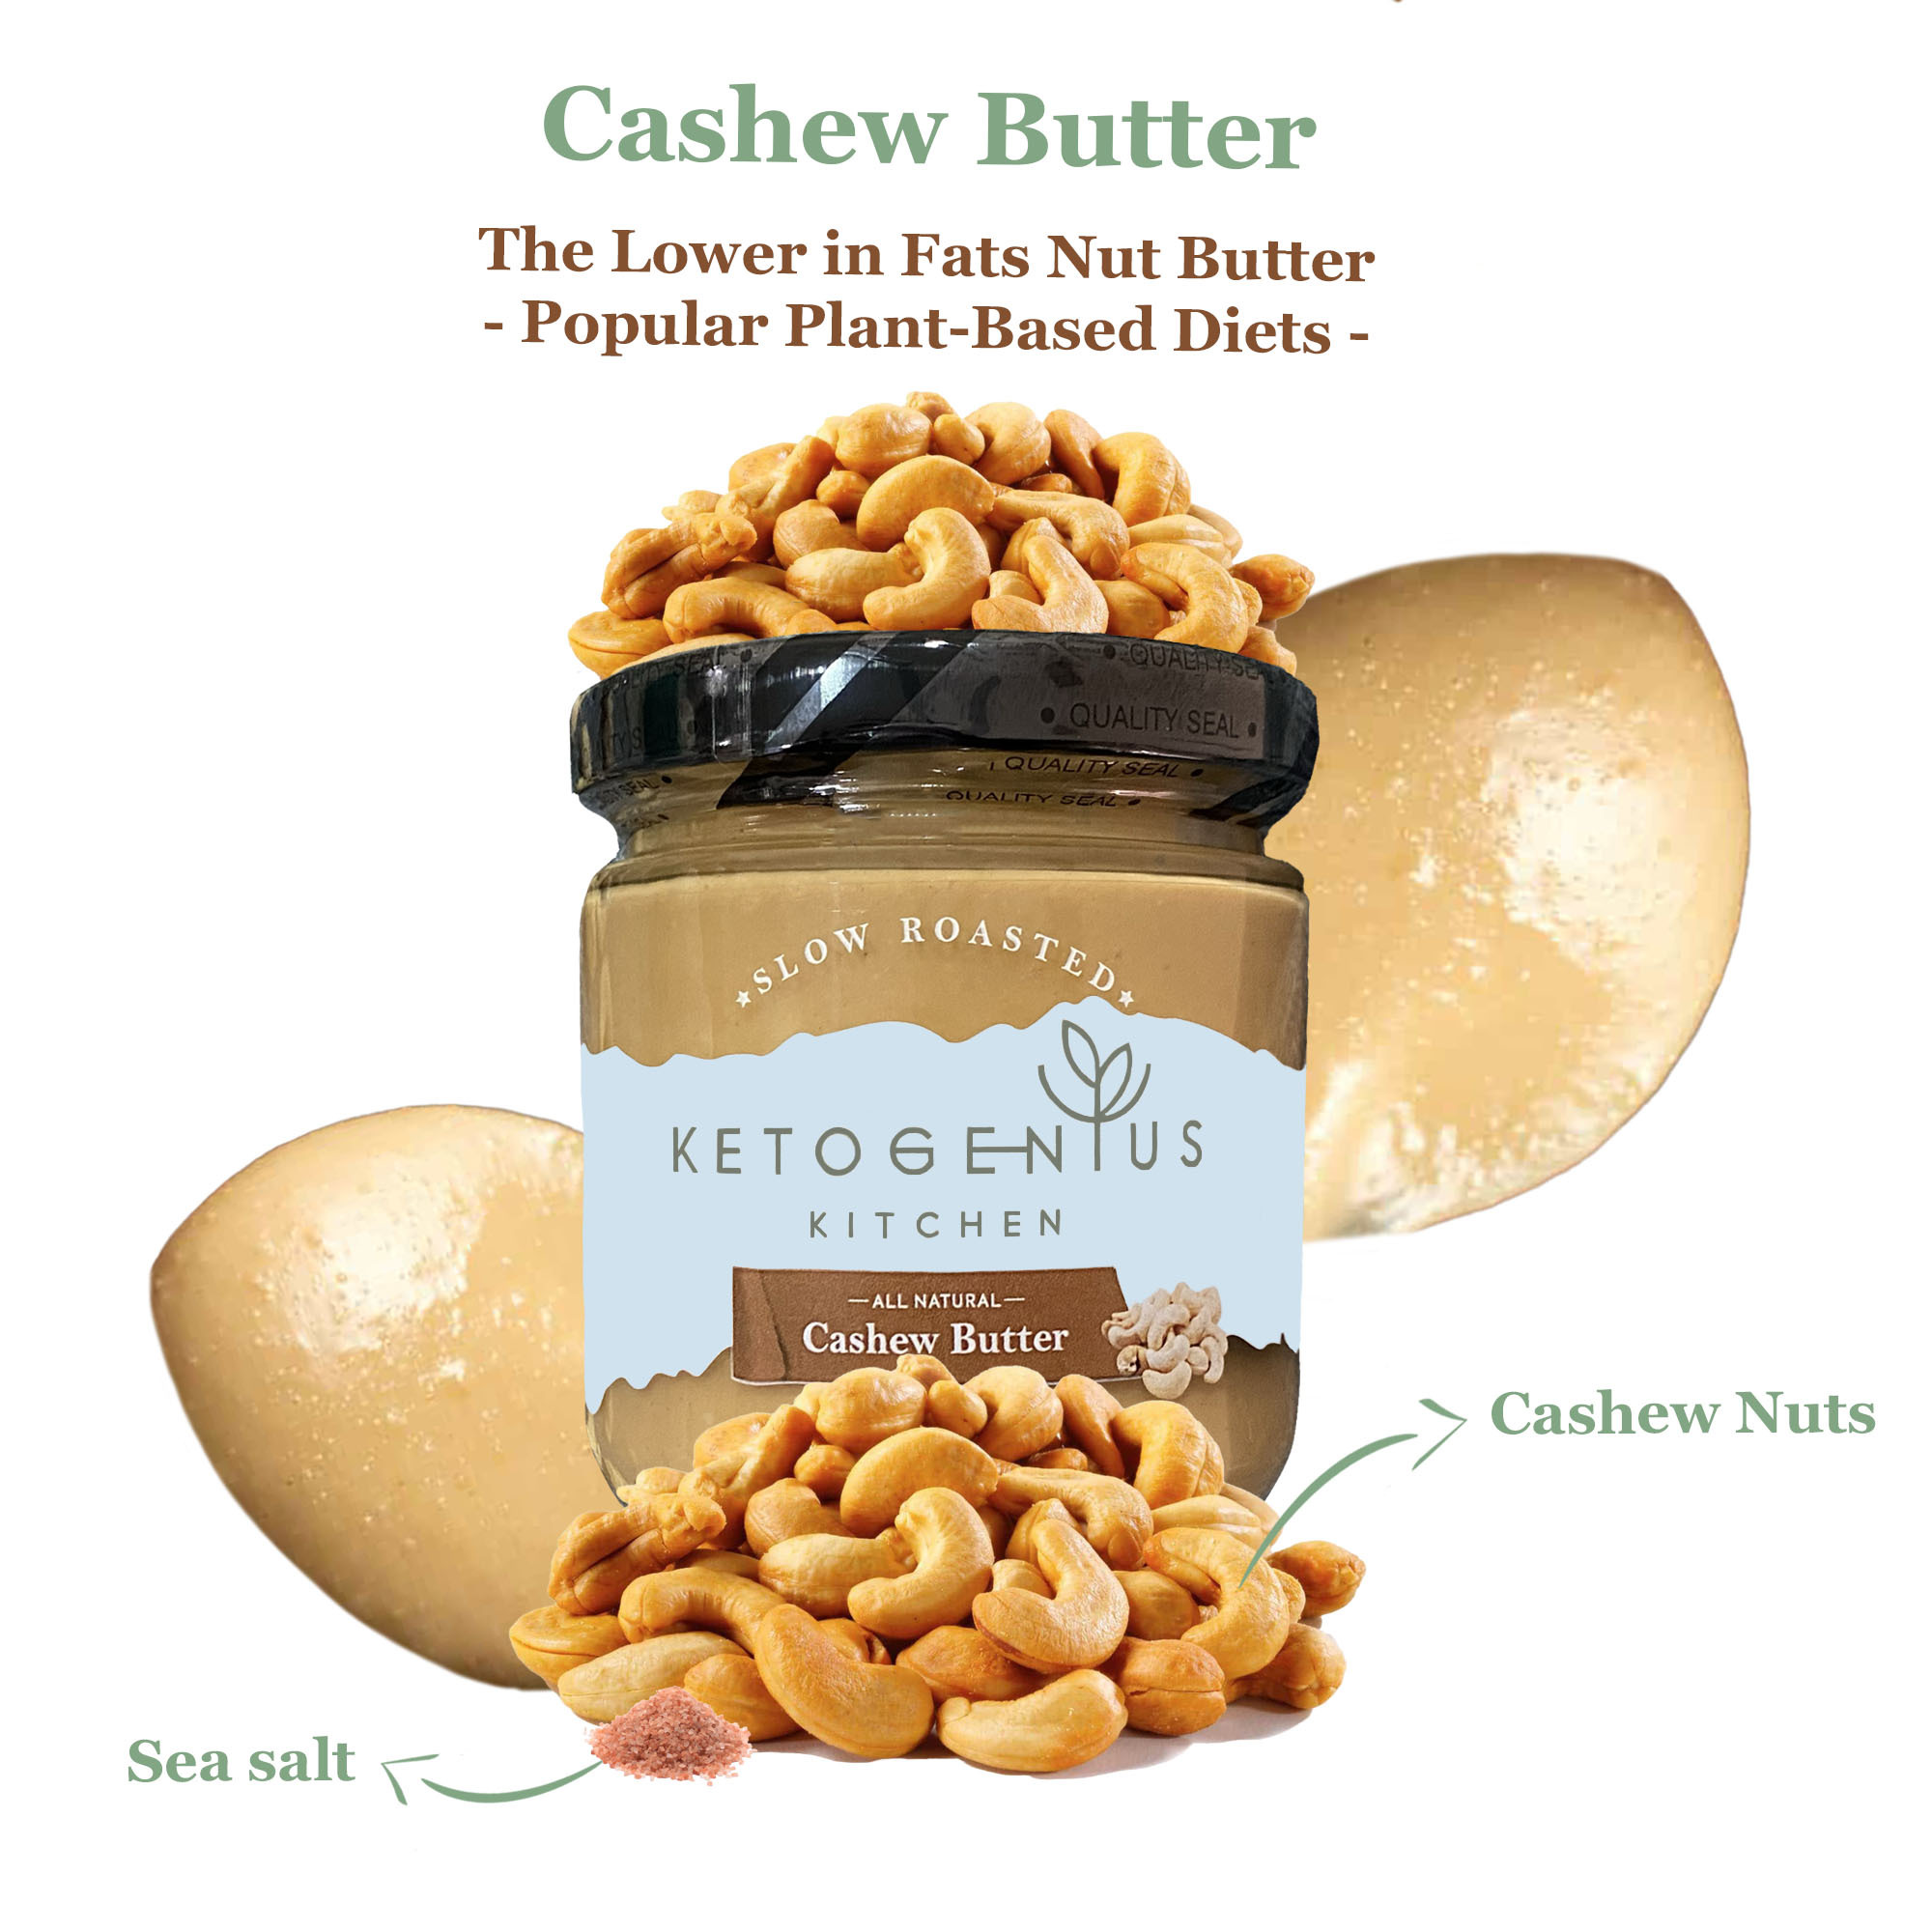 Cashew butter profile